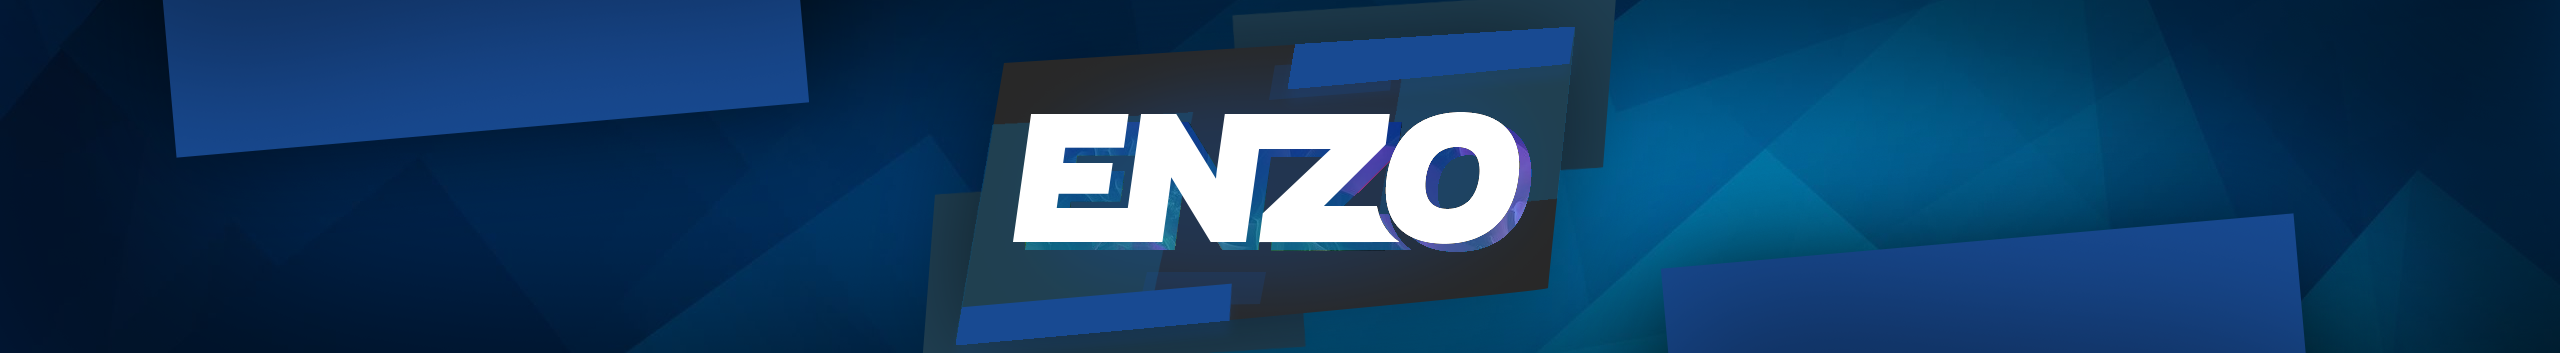 EnzoDZN ♀=♂'s profile banner